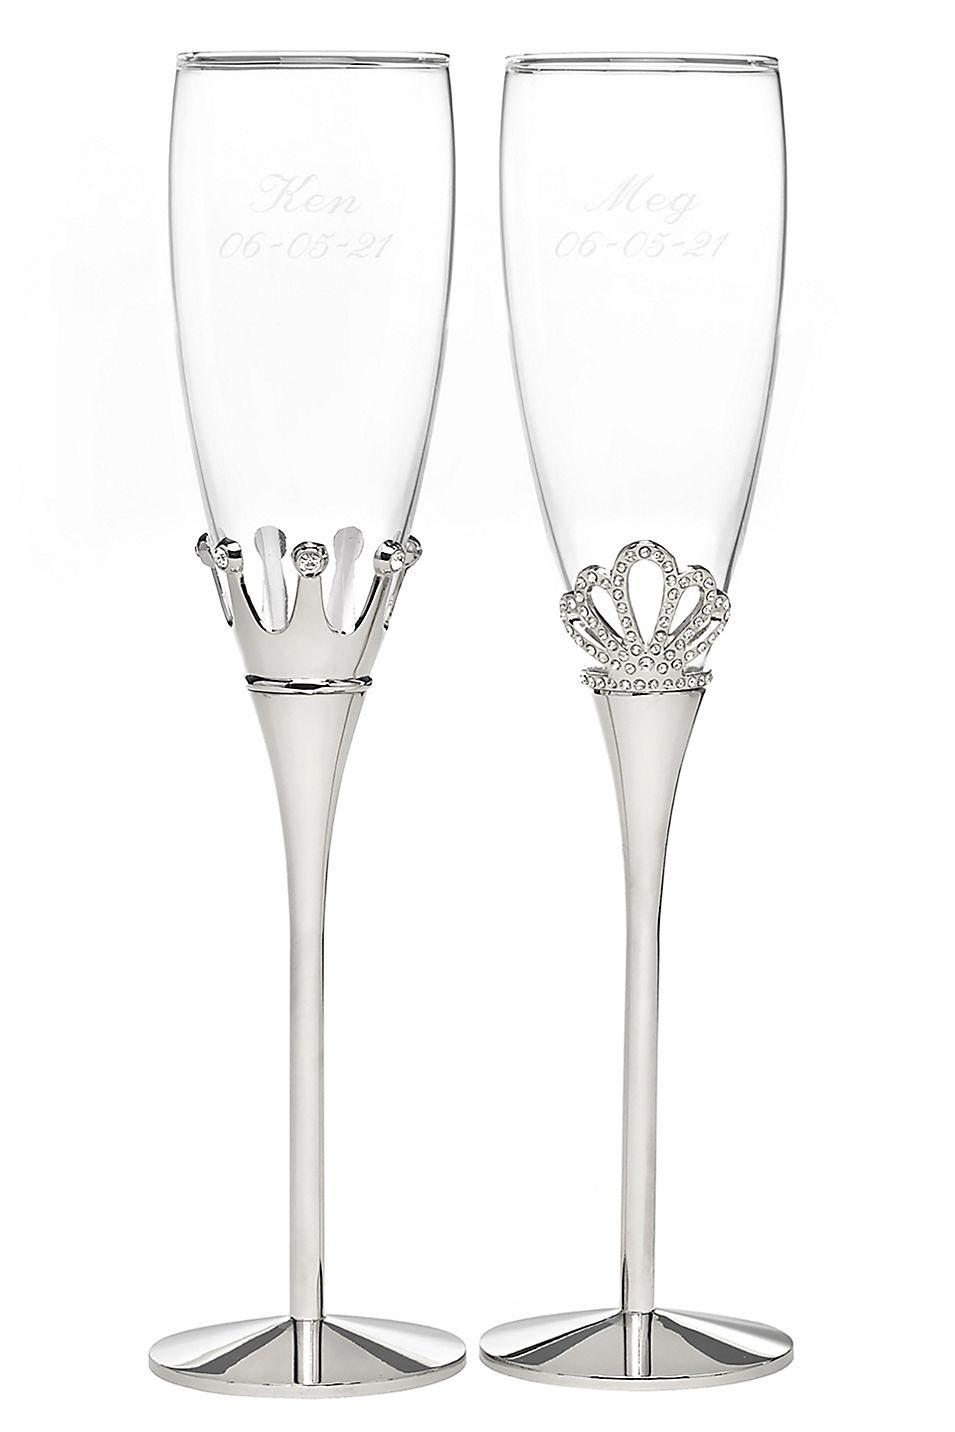 https://cdn0.weddingwire.com/article/3231/original/1280/jpg/11323-18-wedding-champagne-flutes.jpeg